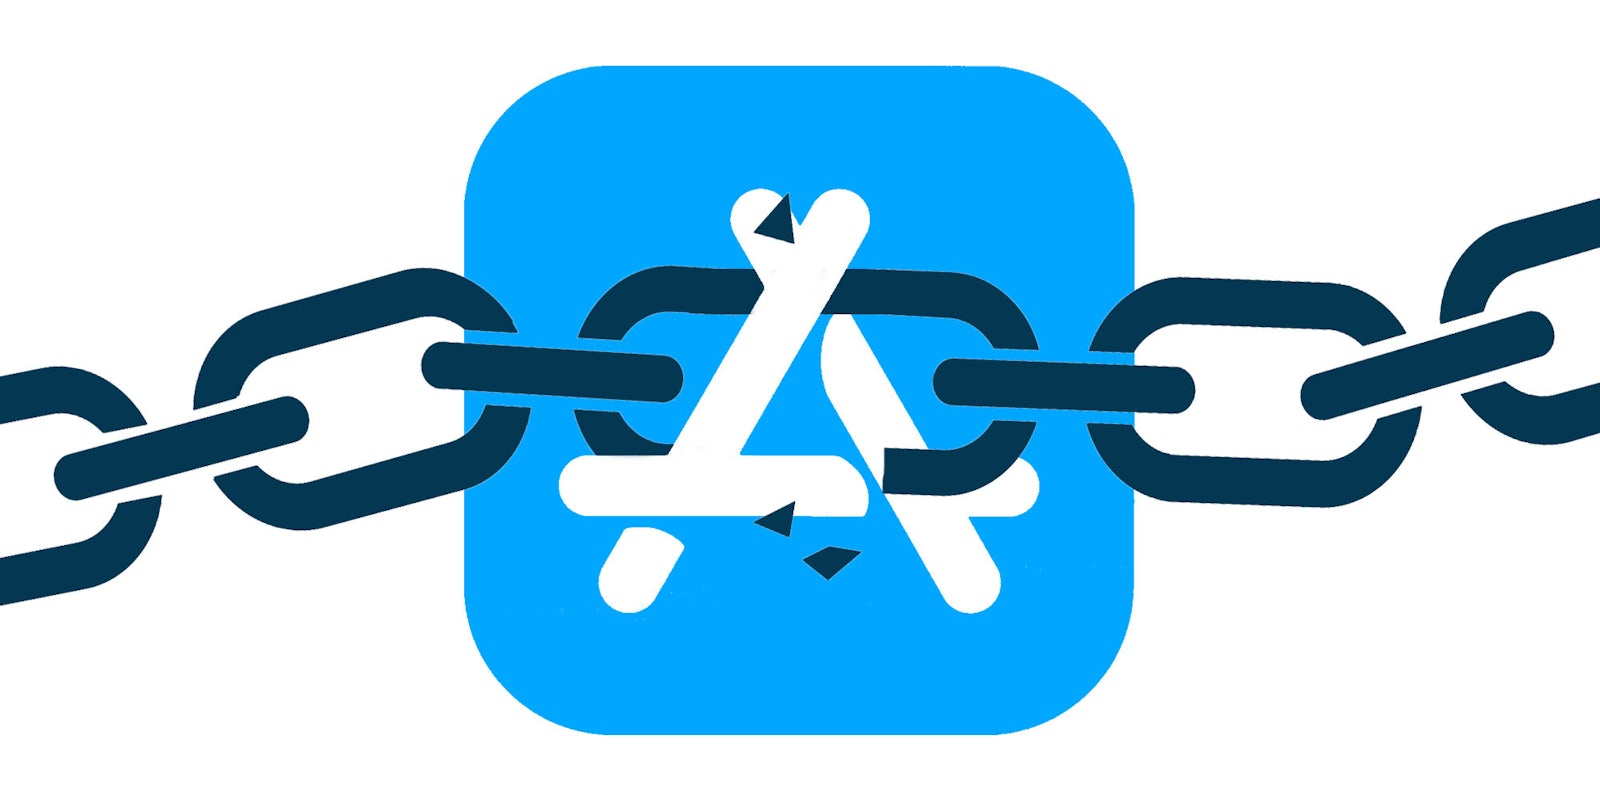 Apple App Store logo with dark blue chain lock broken across logo